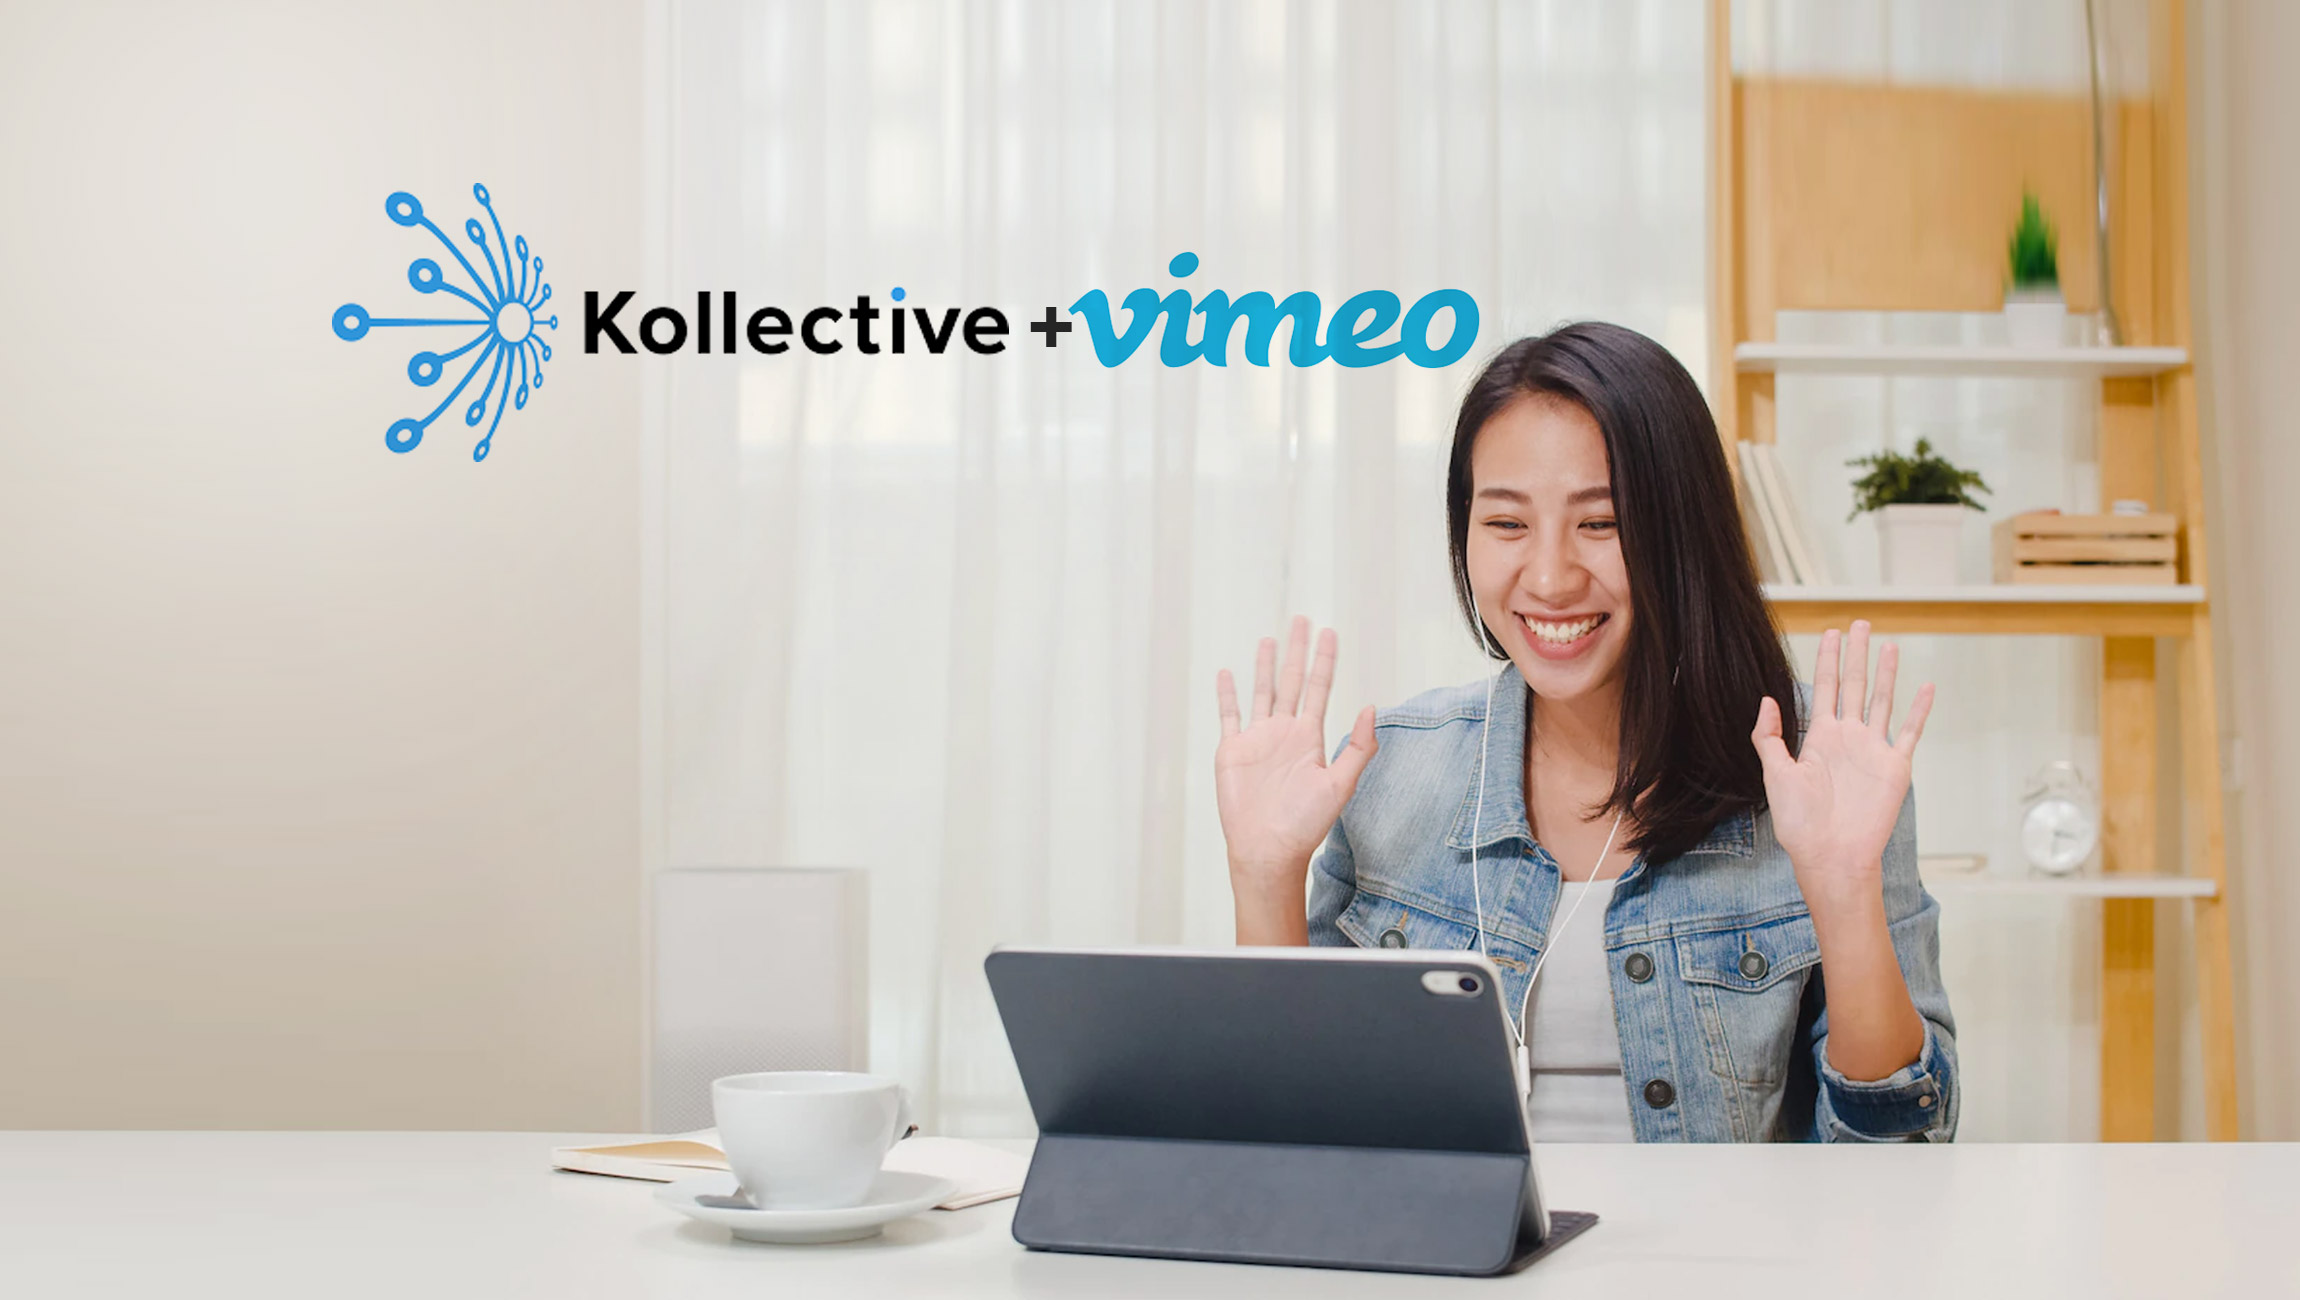 Kollective Announces Vimeo Partnership to Scale Enterprise Video Communications 1